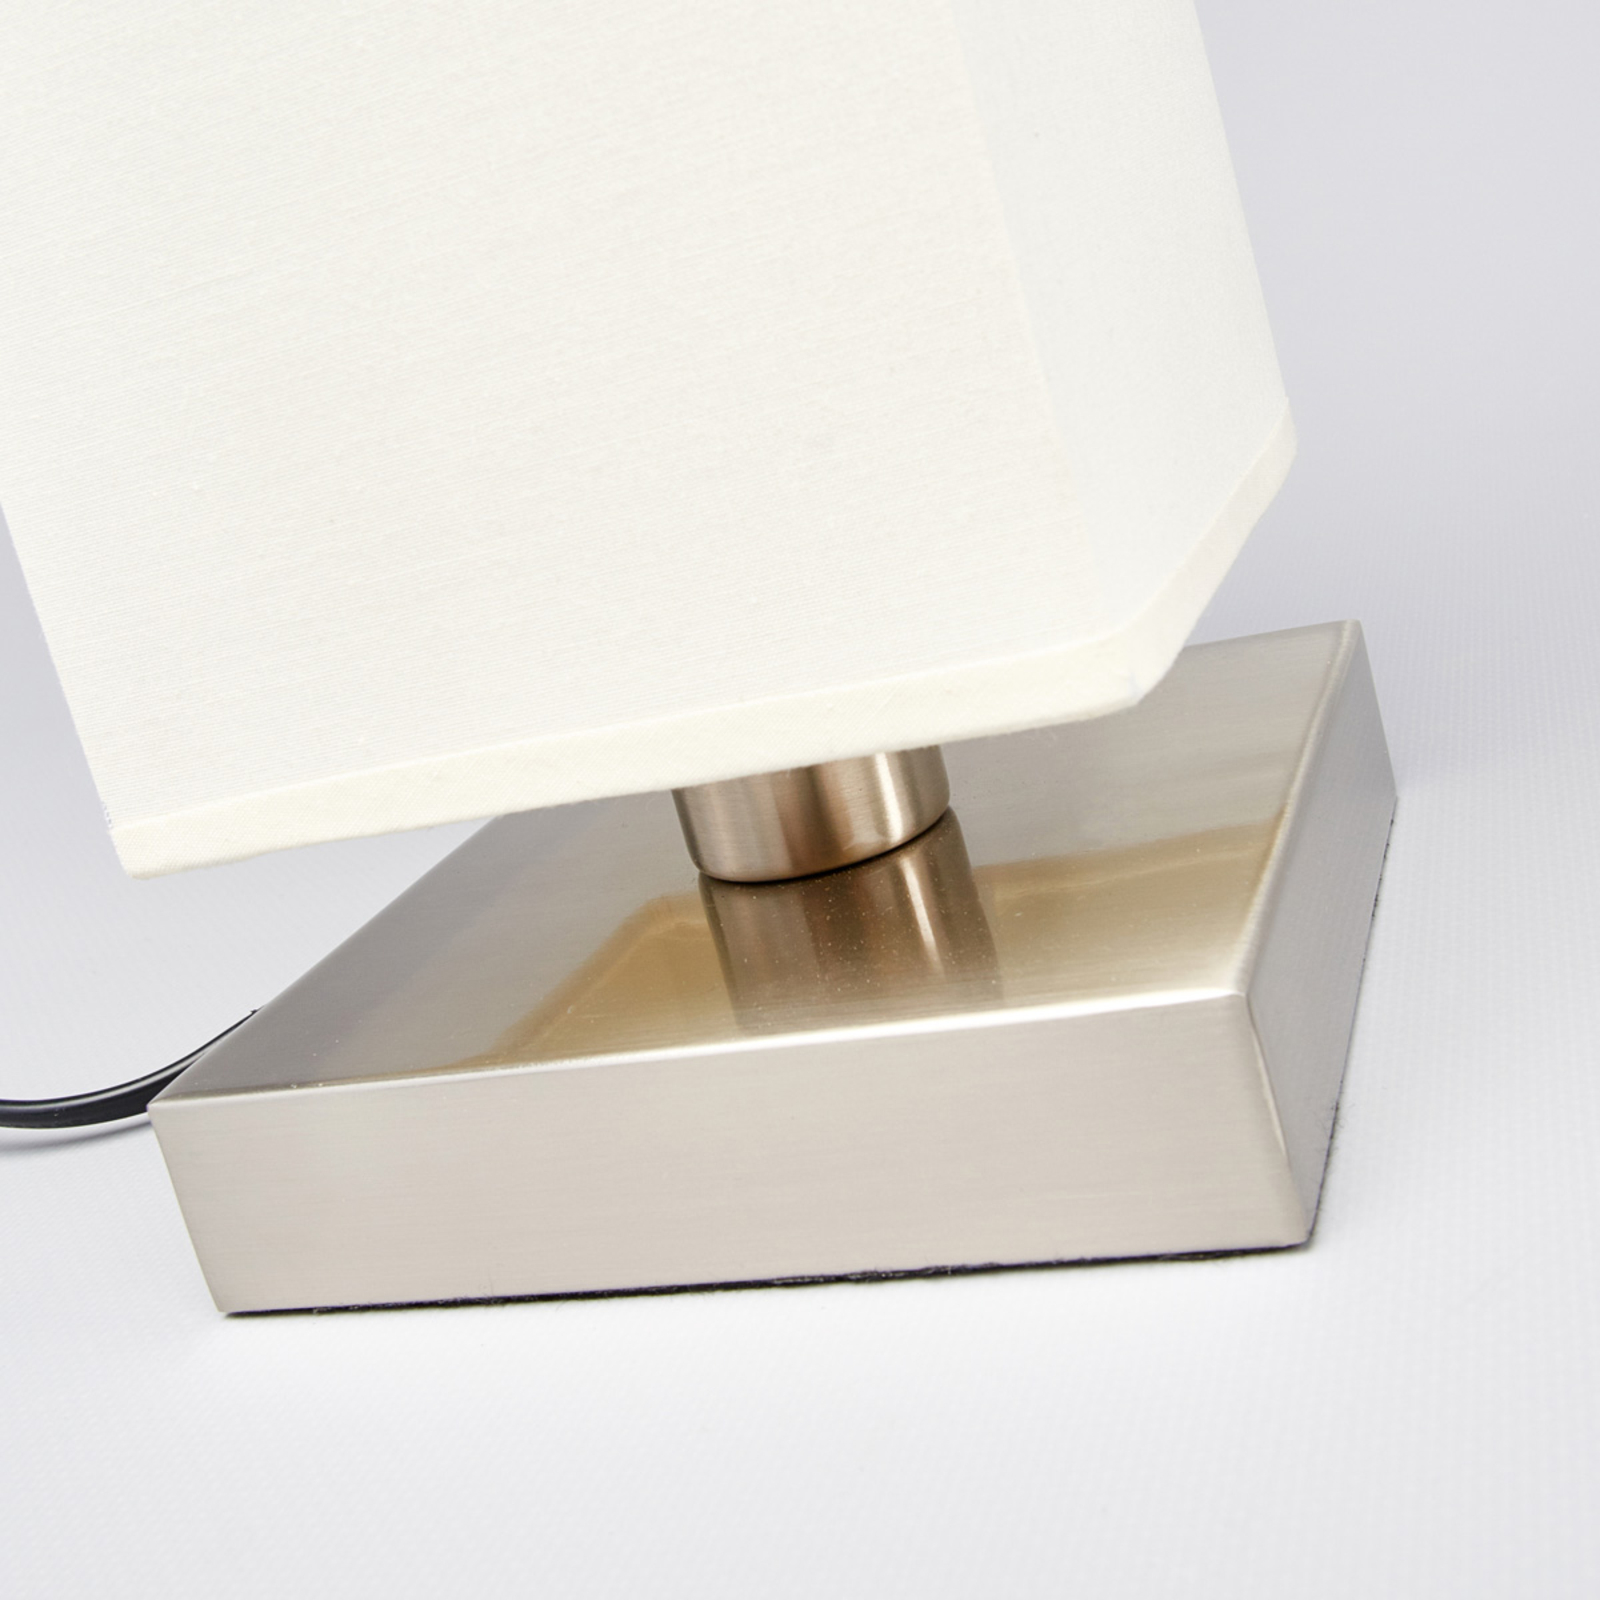 Martje - hvid bordlampe med E14-pære